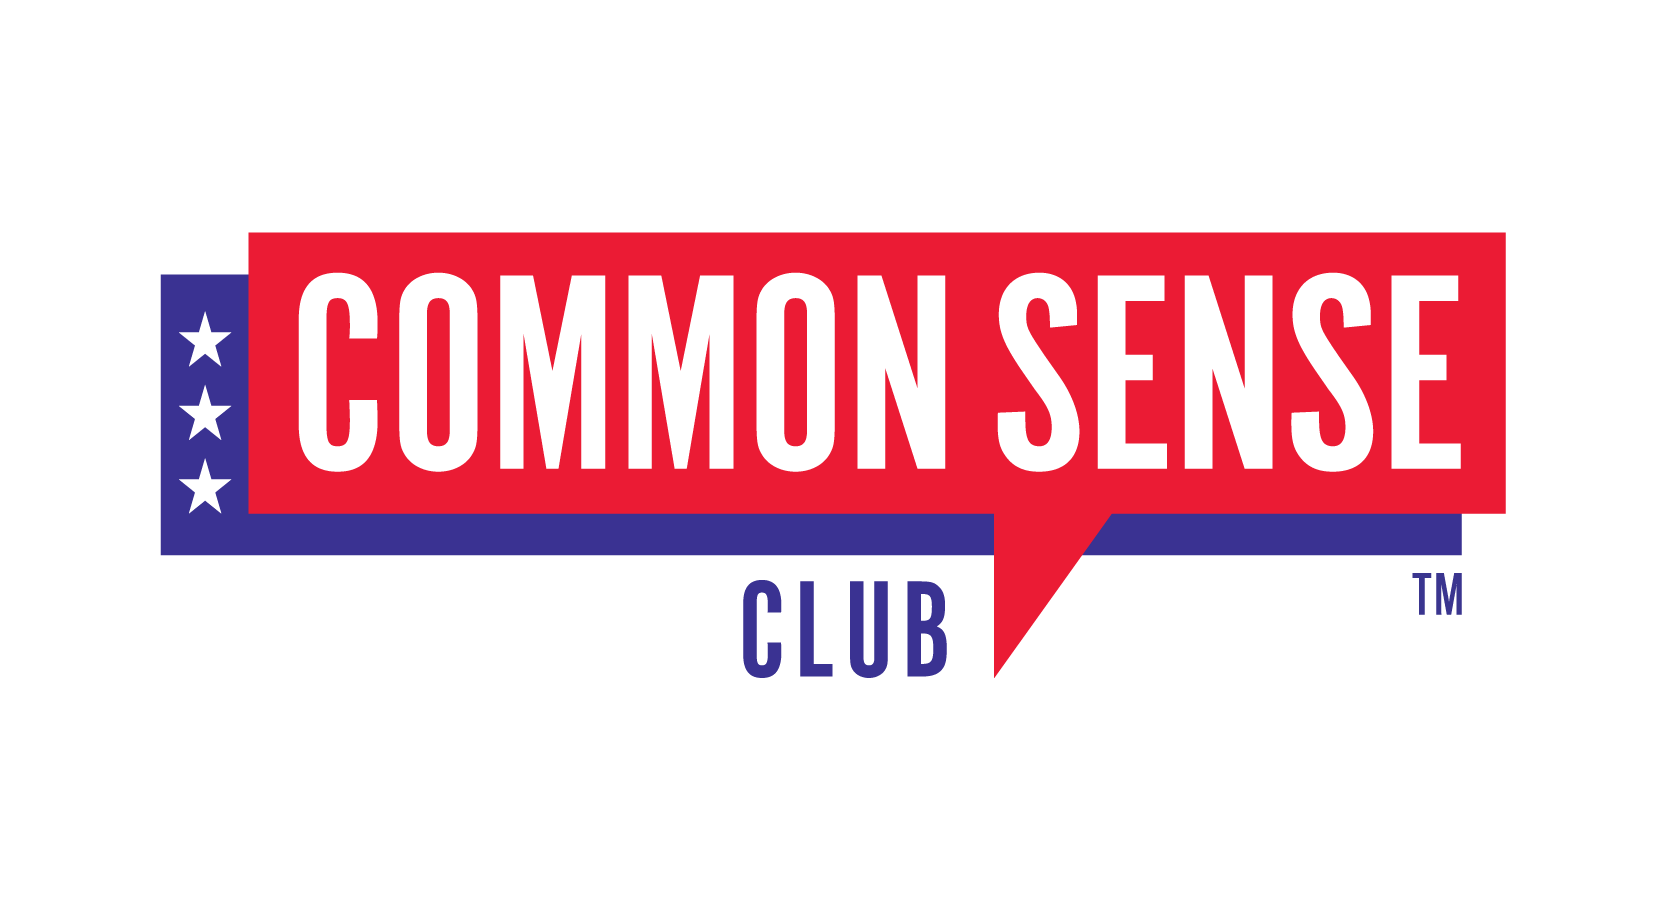 Common sense club logo tm full color